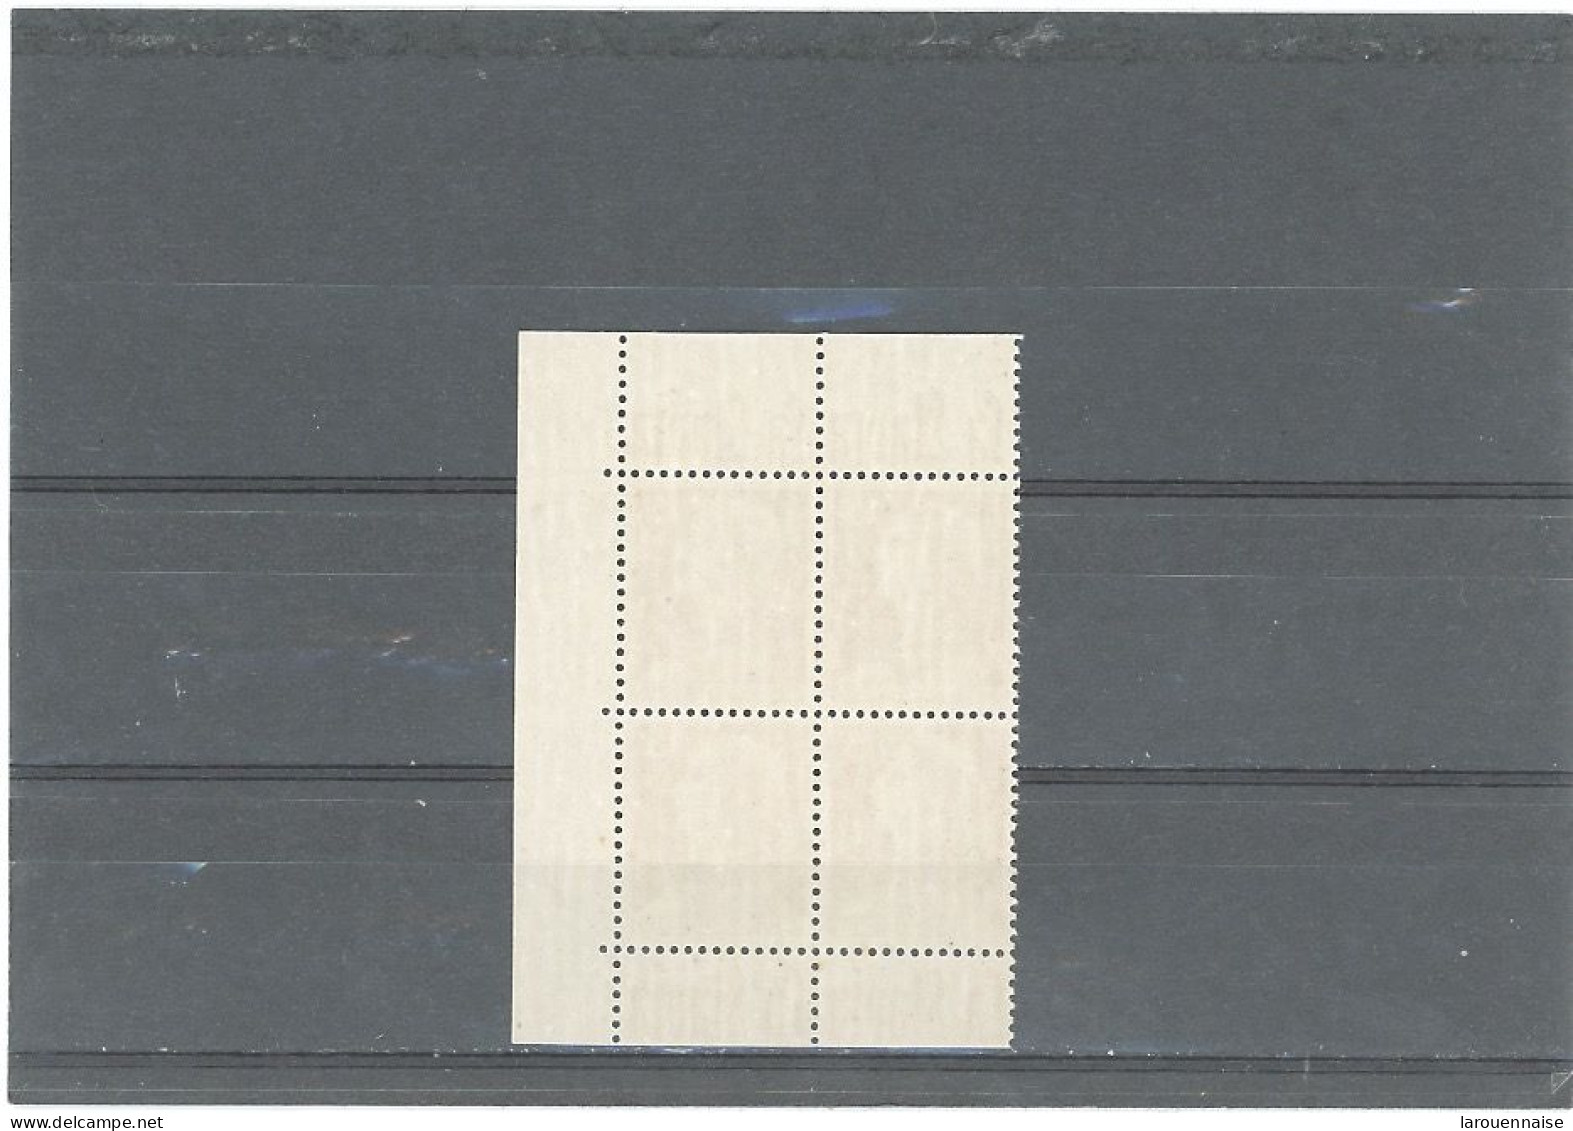 BANDE PUB -N°1011 -TYPE MULLER -15f ROSE  BLOC DE 4 N**-2 PAIRES SLAVIA( Ouvert +ouvert ) MAURY 288d - Unused Stamps